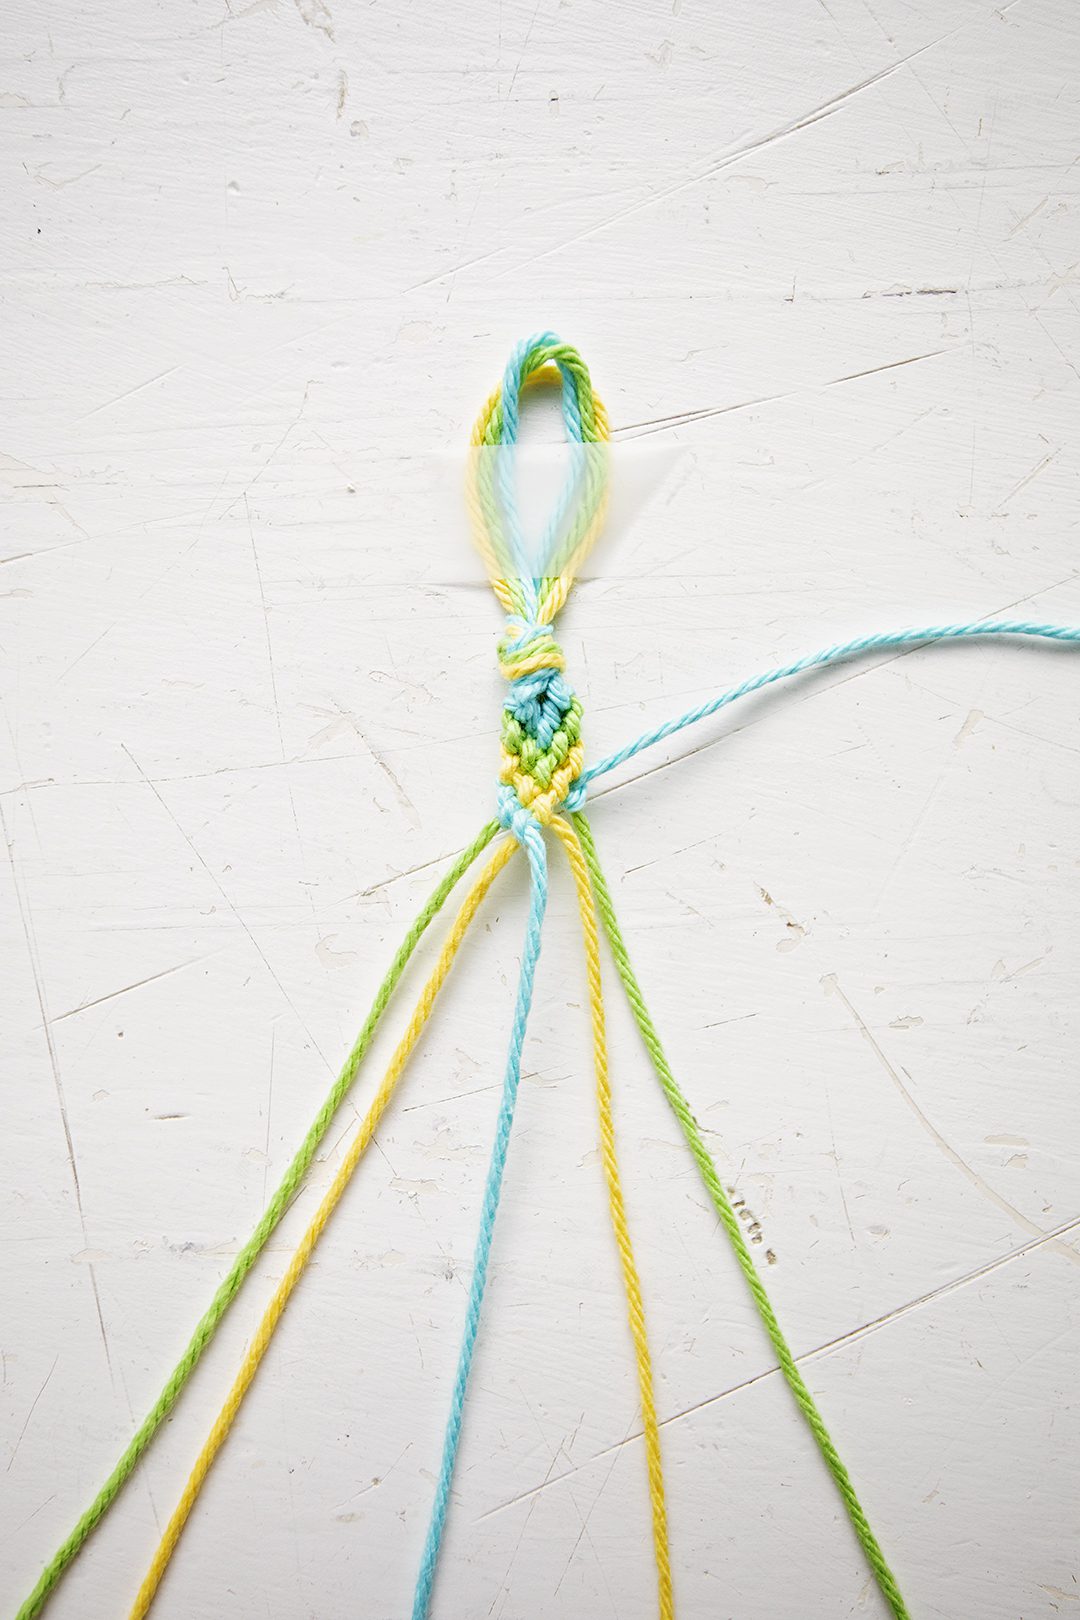 Handmade Green, Blue, and Yellow, Friendship Bracelet. Thread